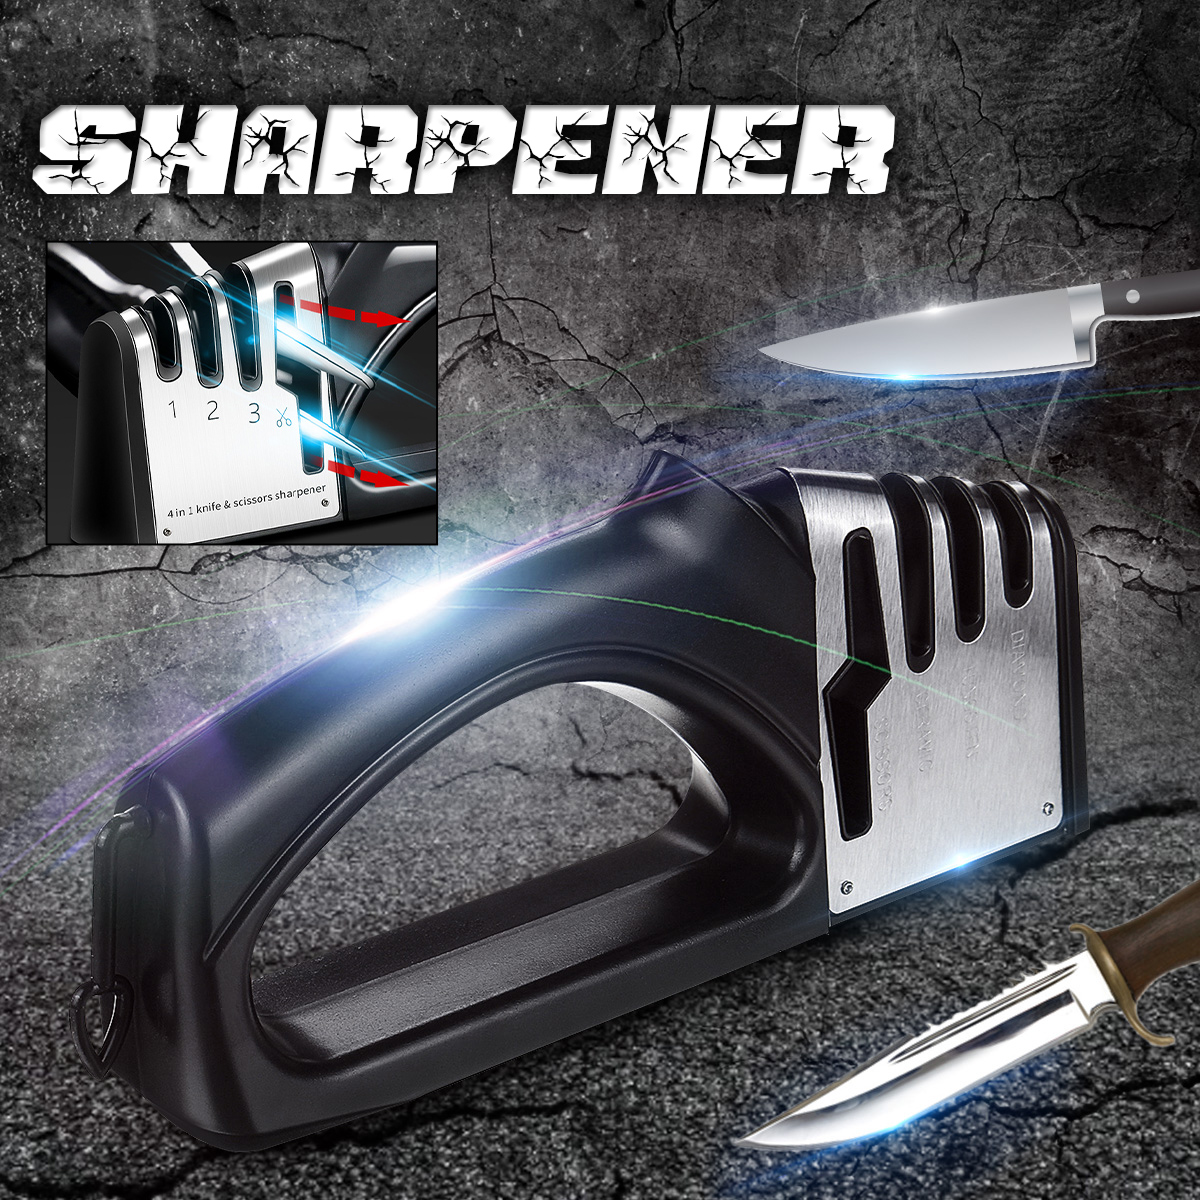 Sharpening-Scissors-Household-Grinder-Sharpen-Stone-Grinder-Rod-Quick-Kitchen-Sharpener-Tool-Stone-1555129-1